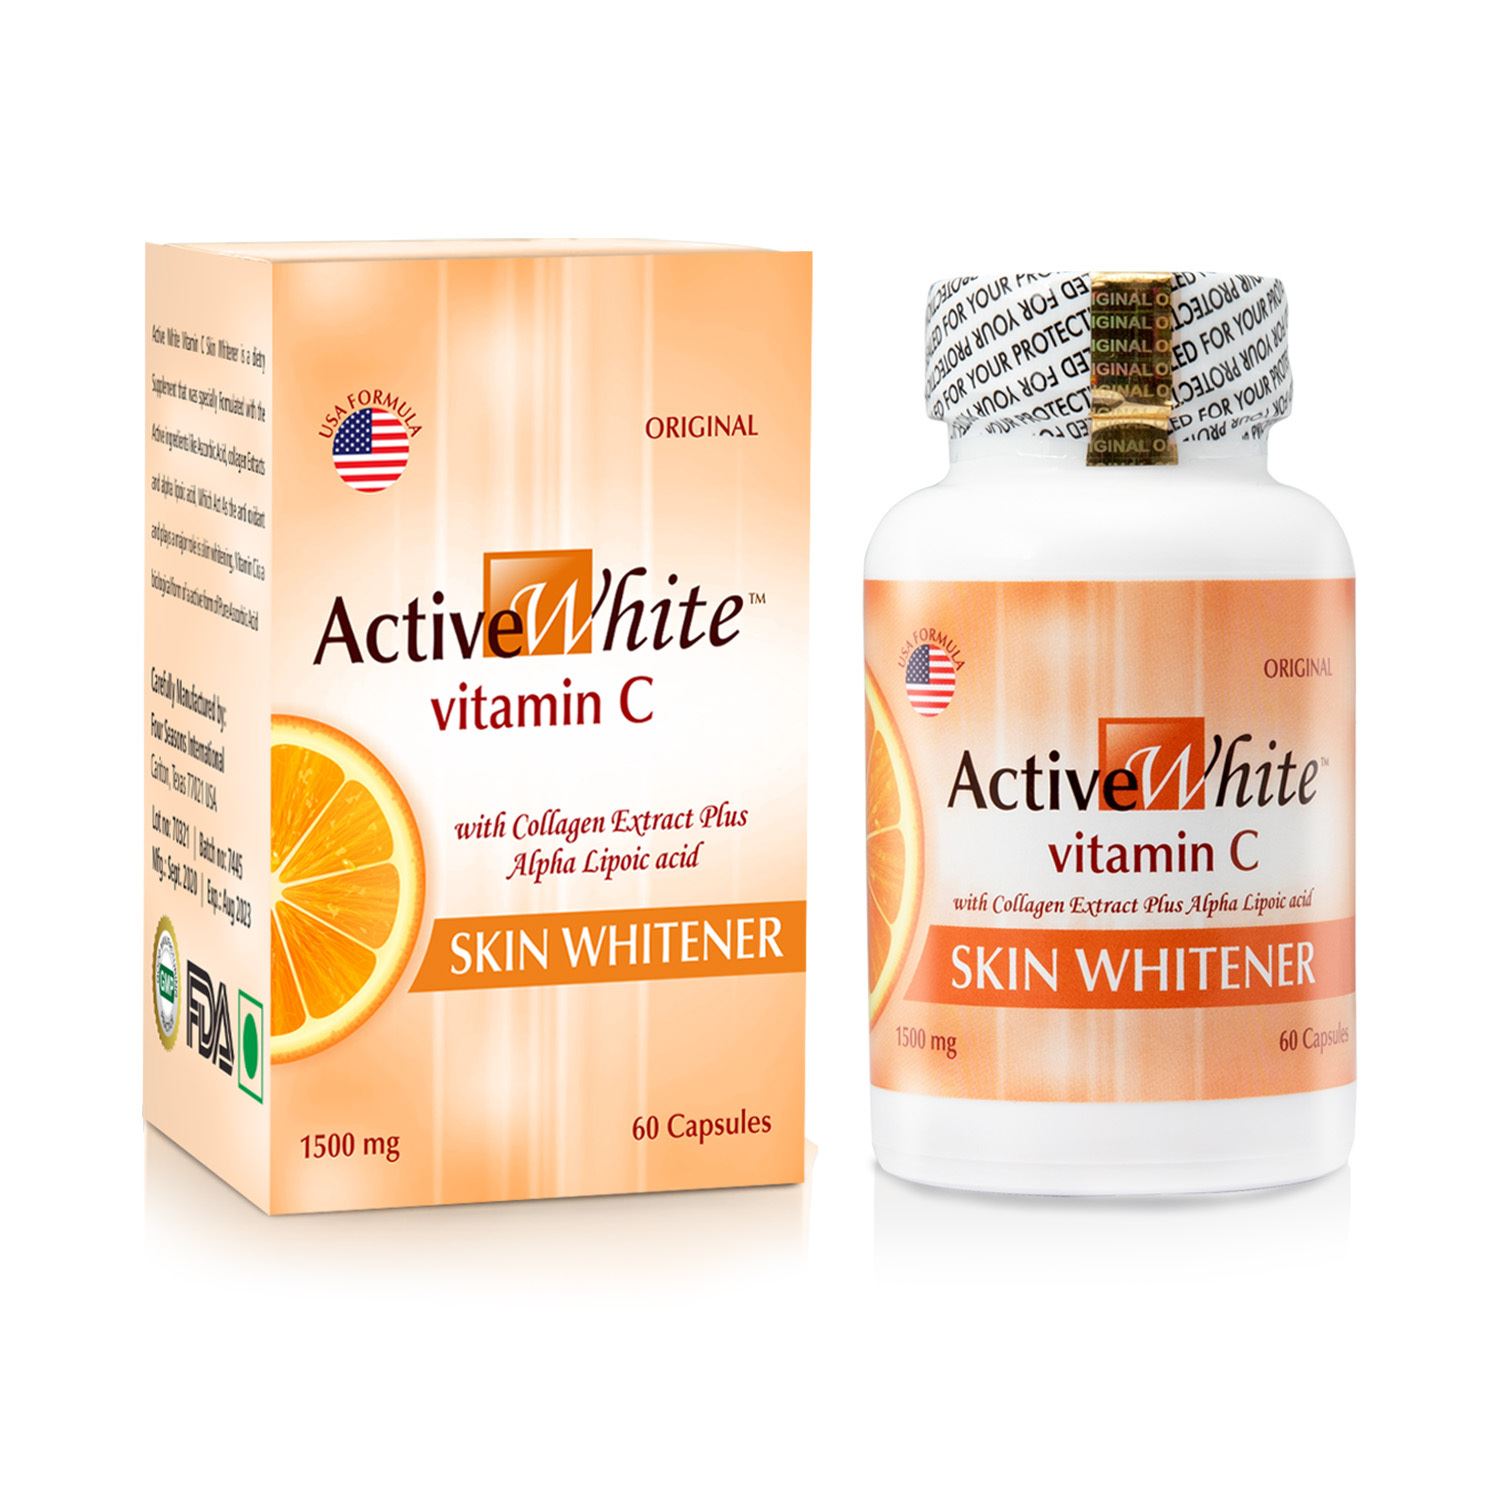 Active White Vitamin C 1000mg Skin Whitening Capsule reviews